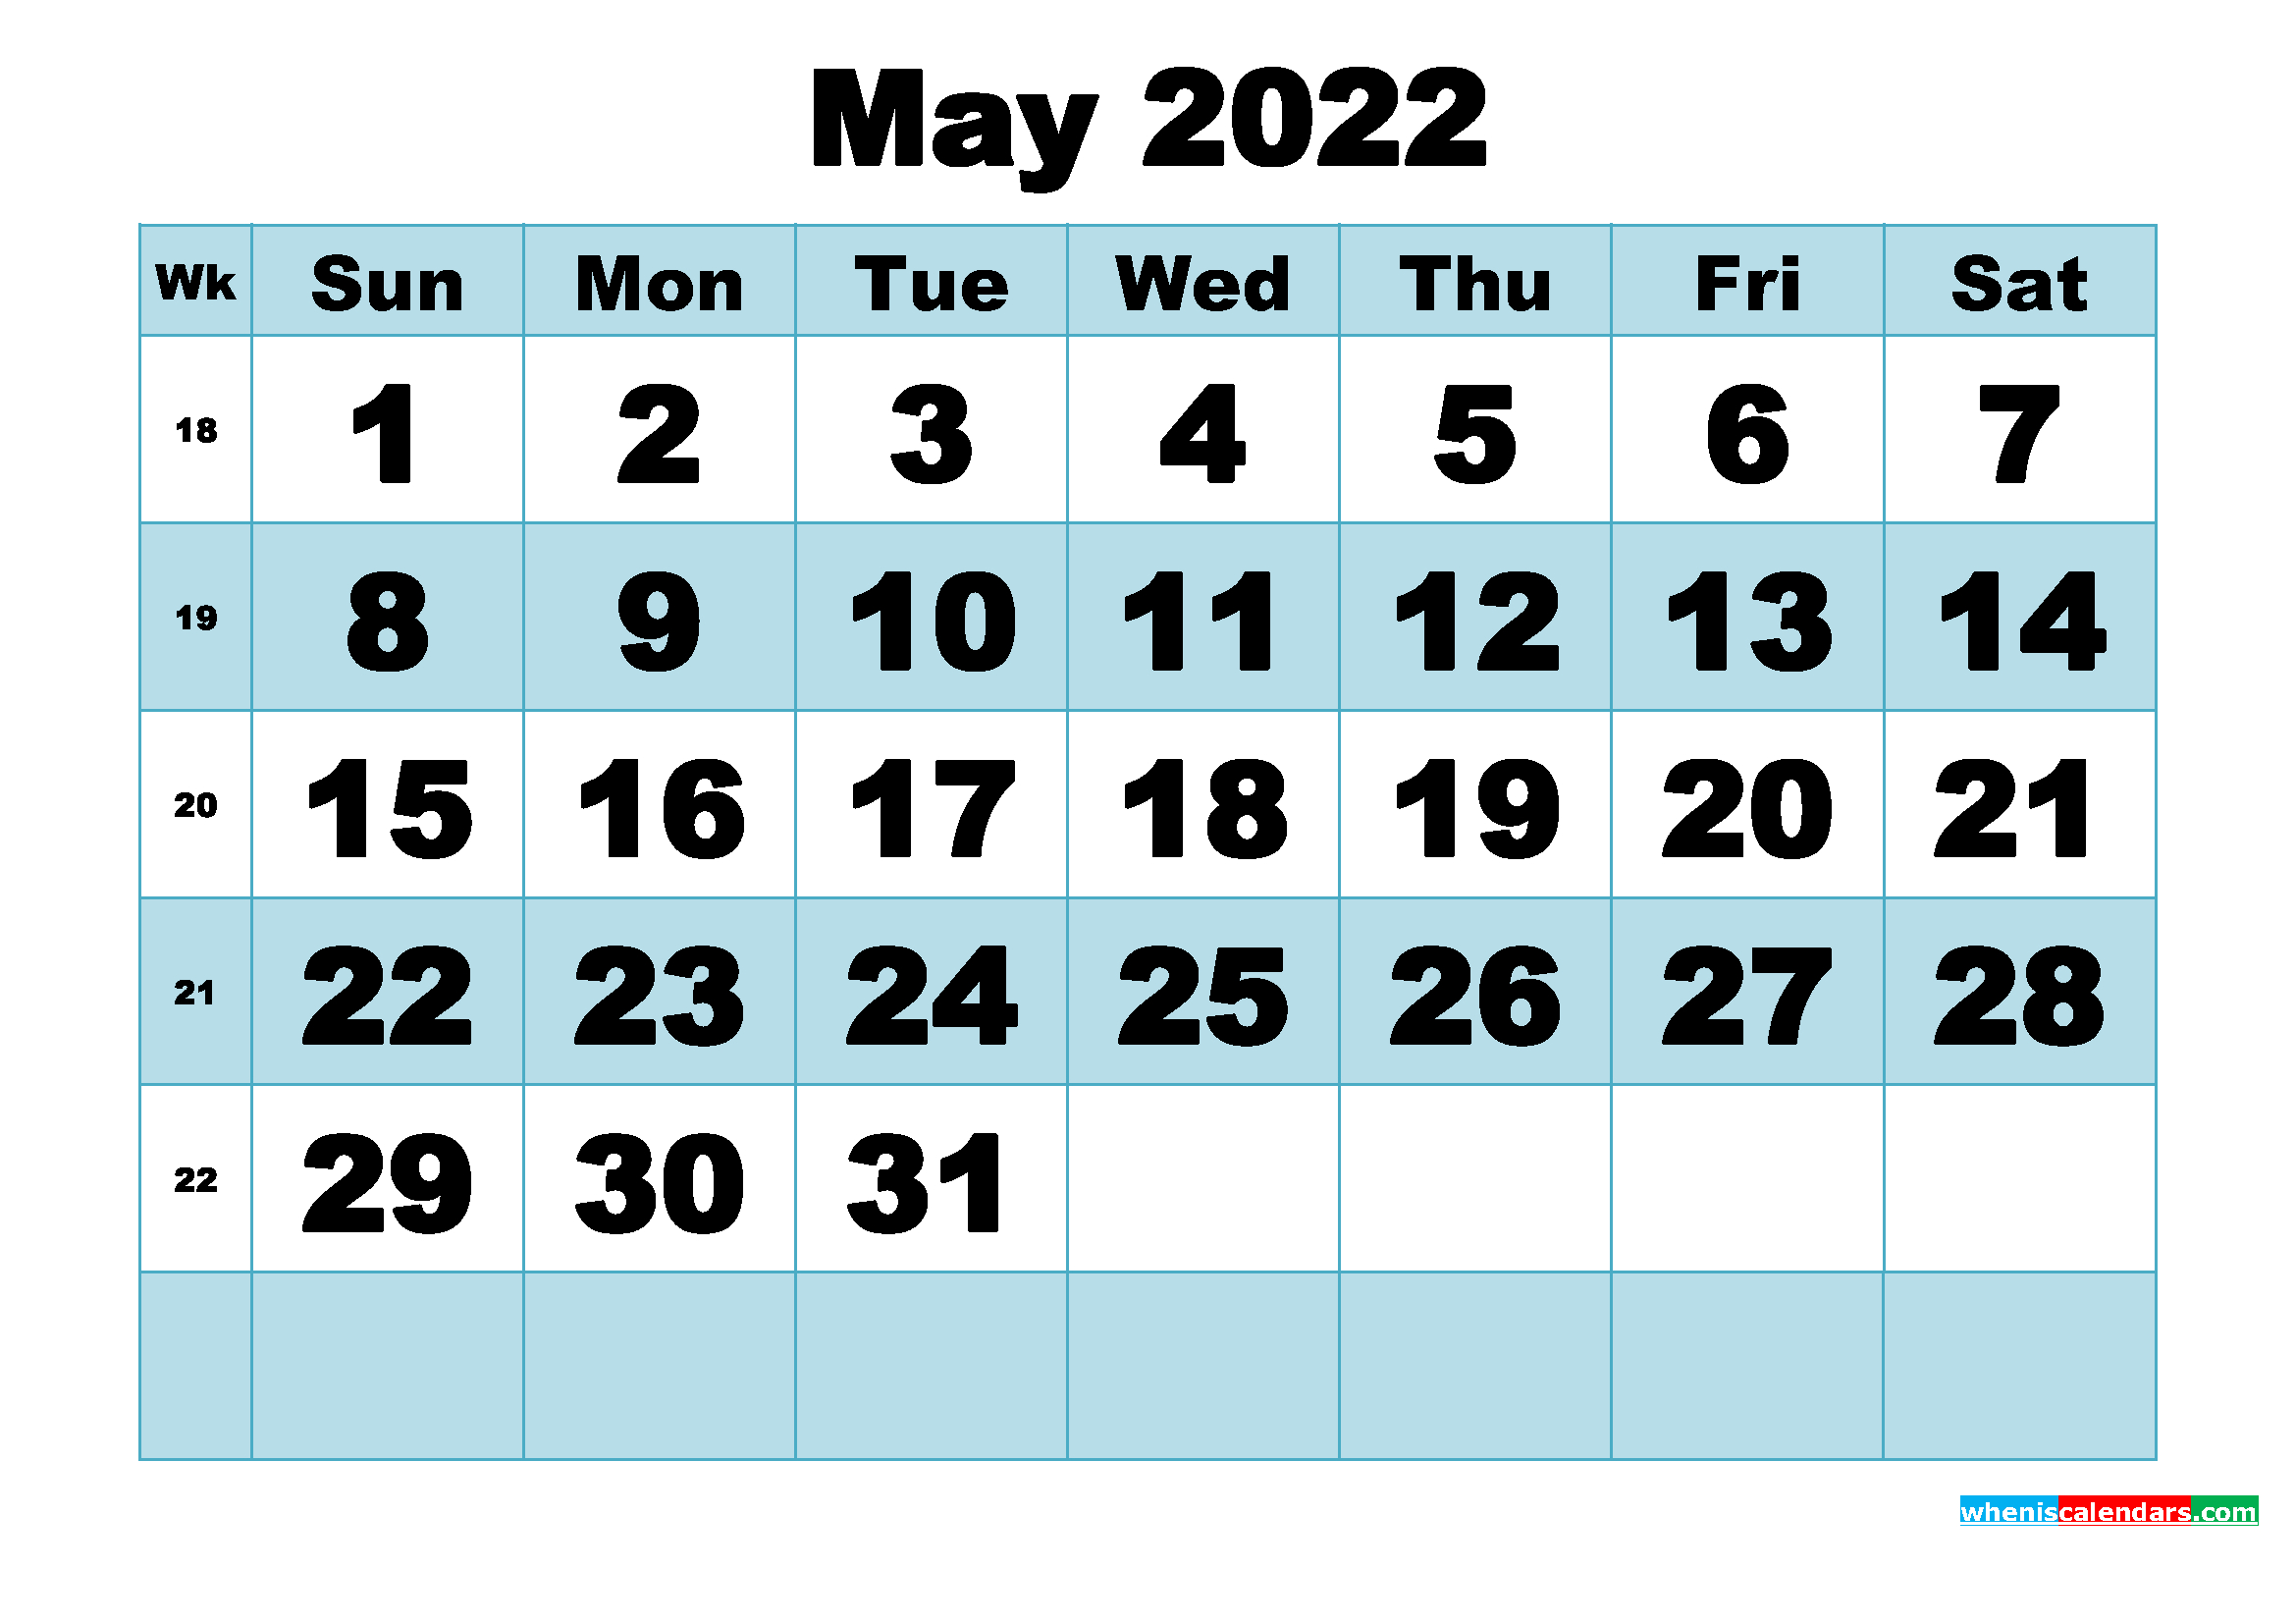 Free Printable May 2022 Calendar Word, Pdf, Image  Free Printable Calendar 2022 In Word